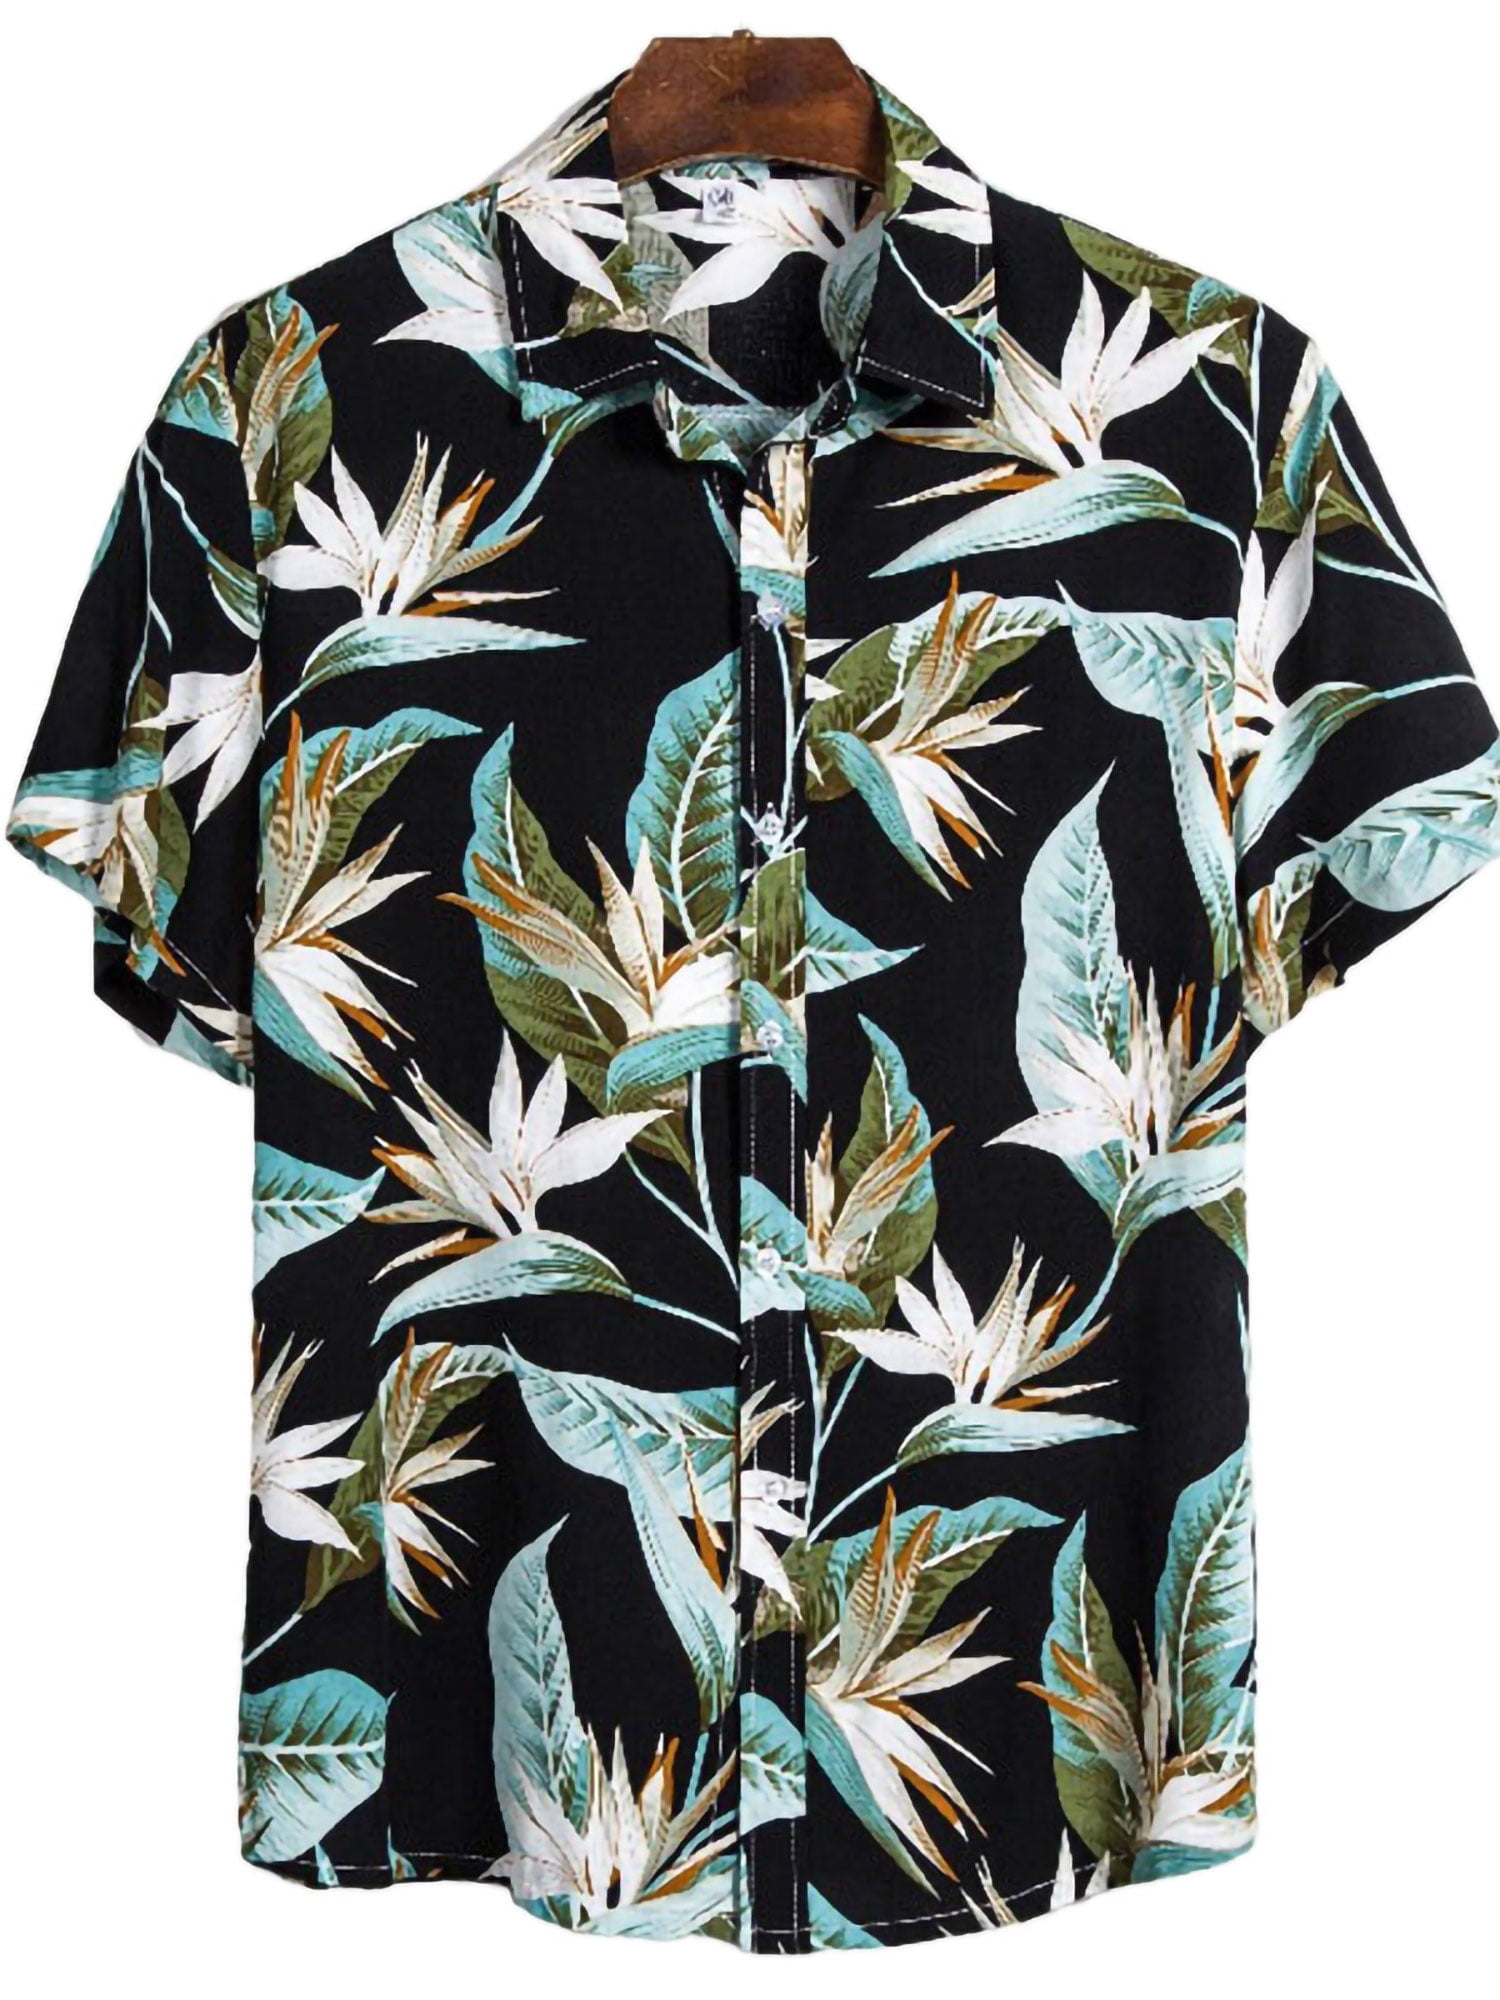 Hawaiian T Shirts For Men